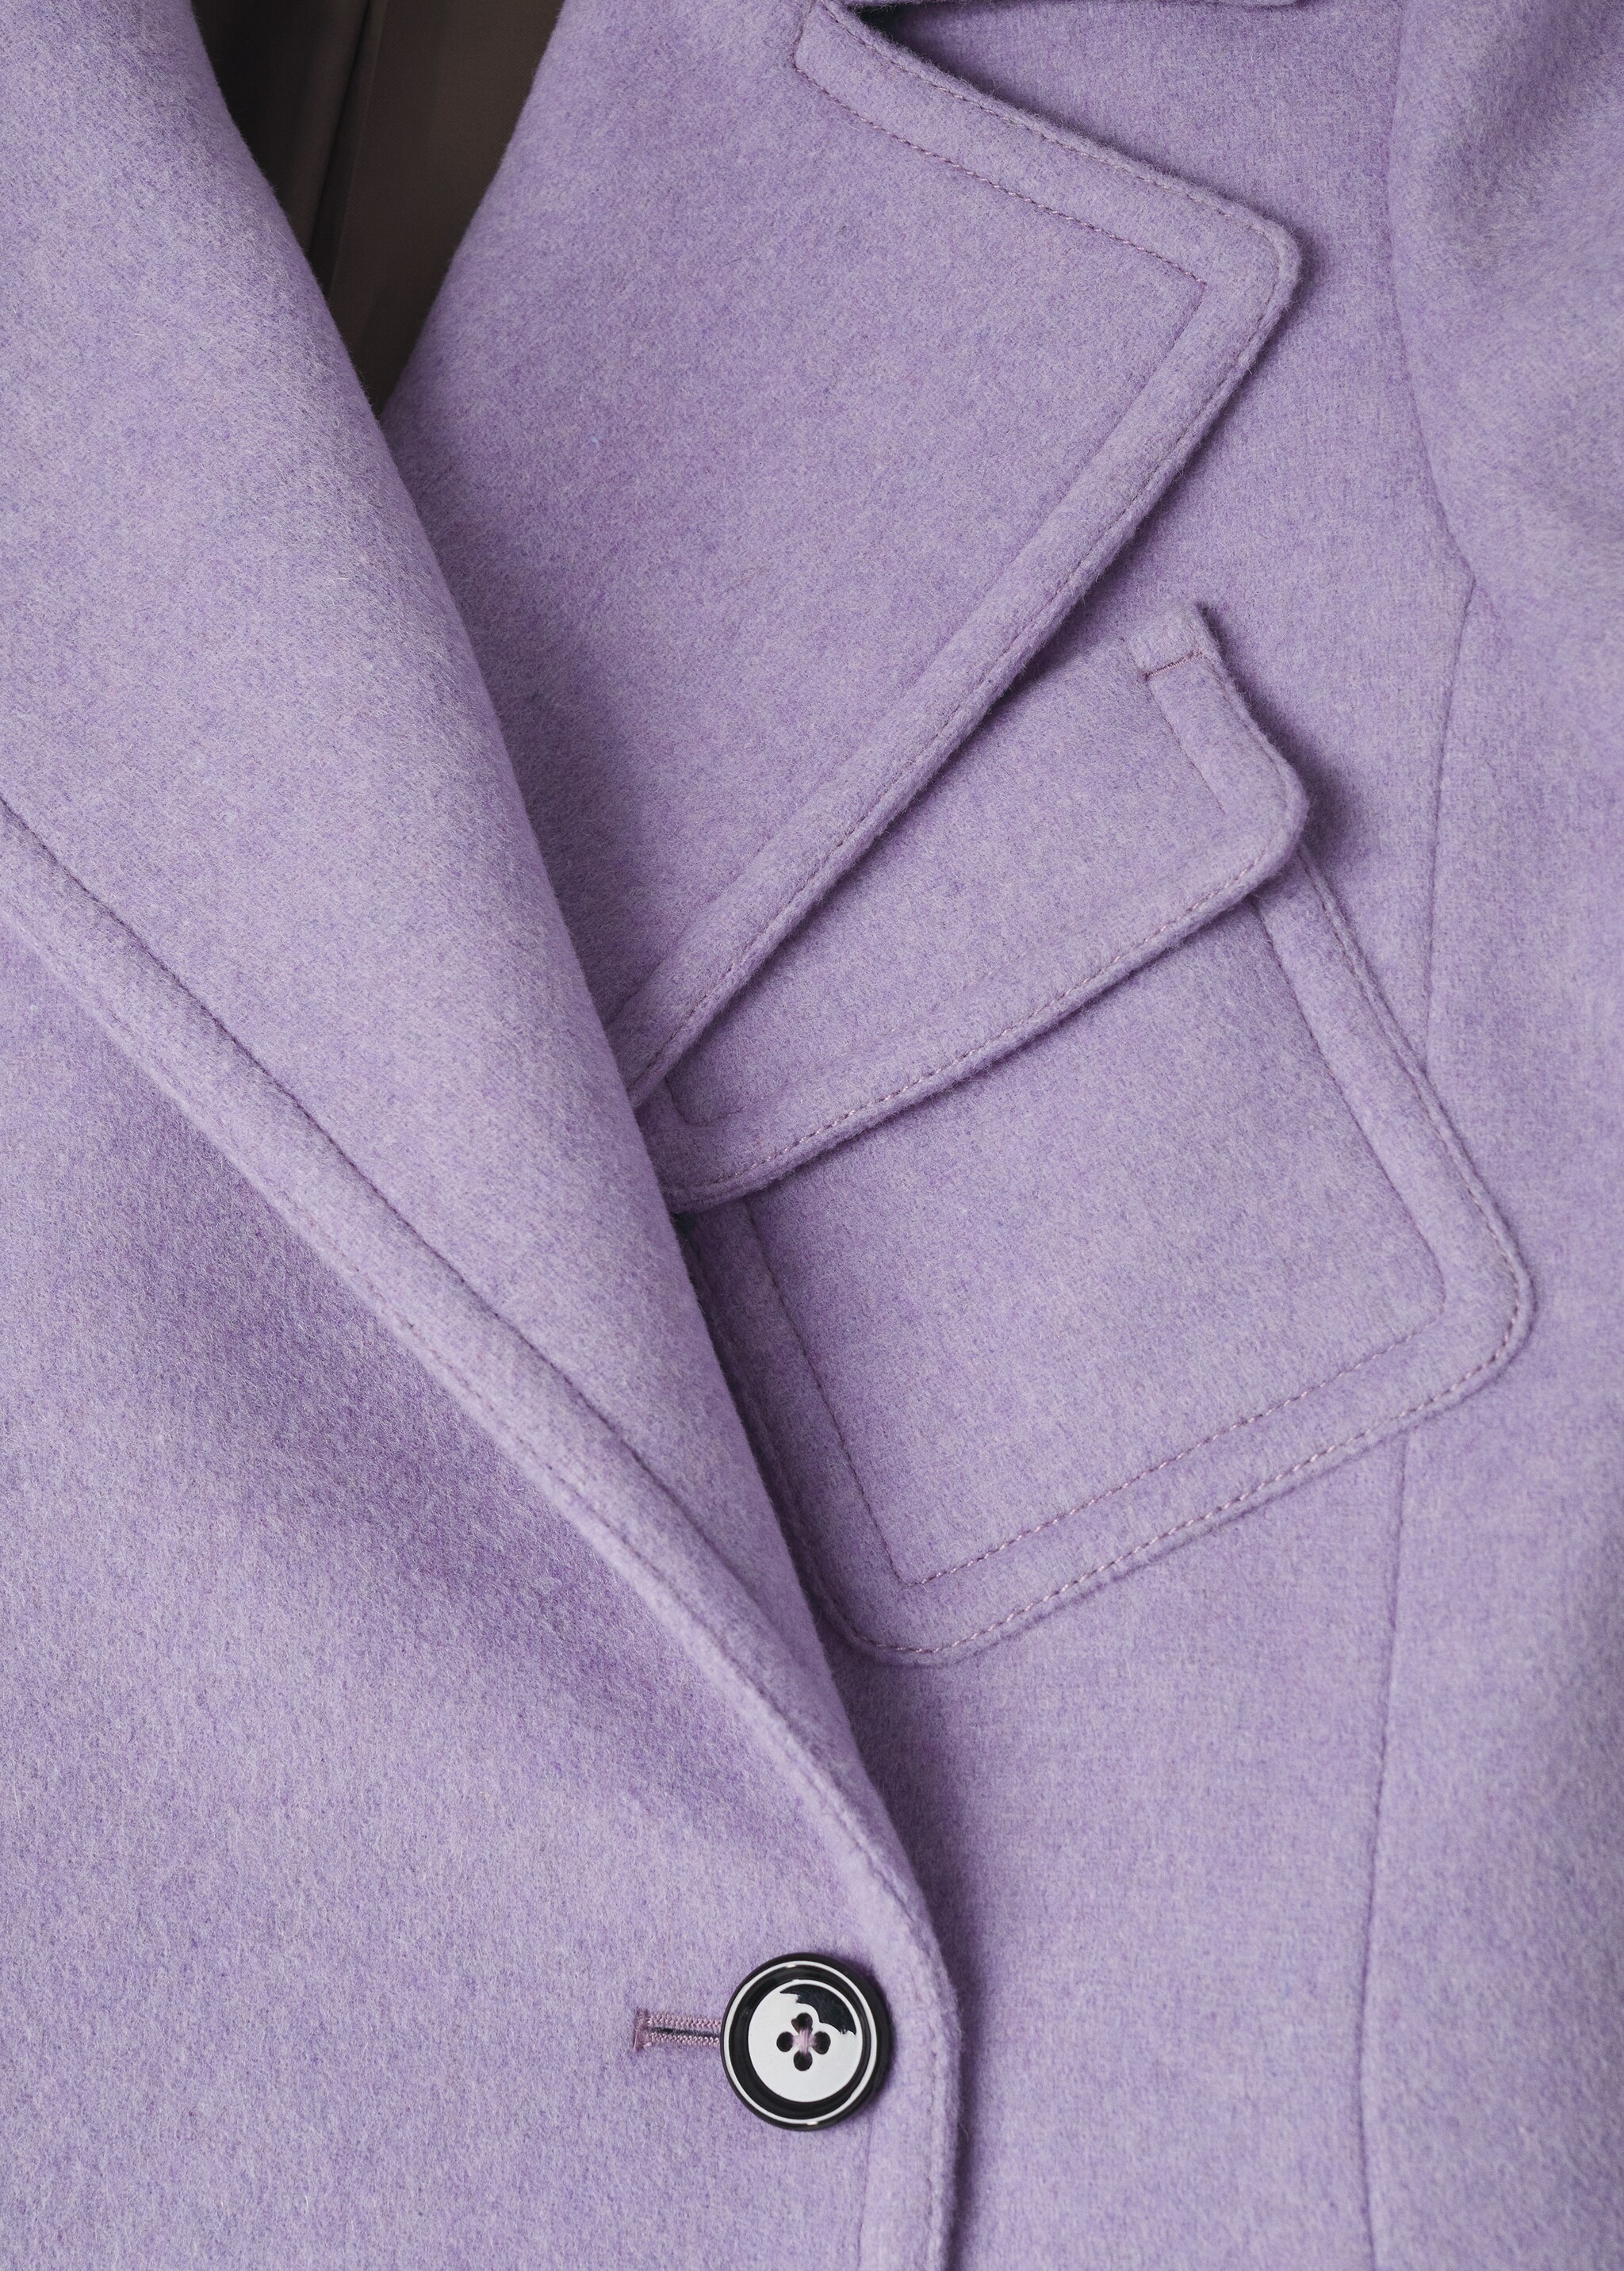 Lapels wool coat - Details of the article 8